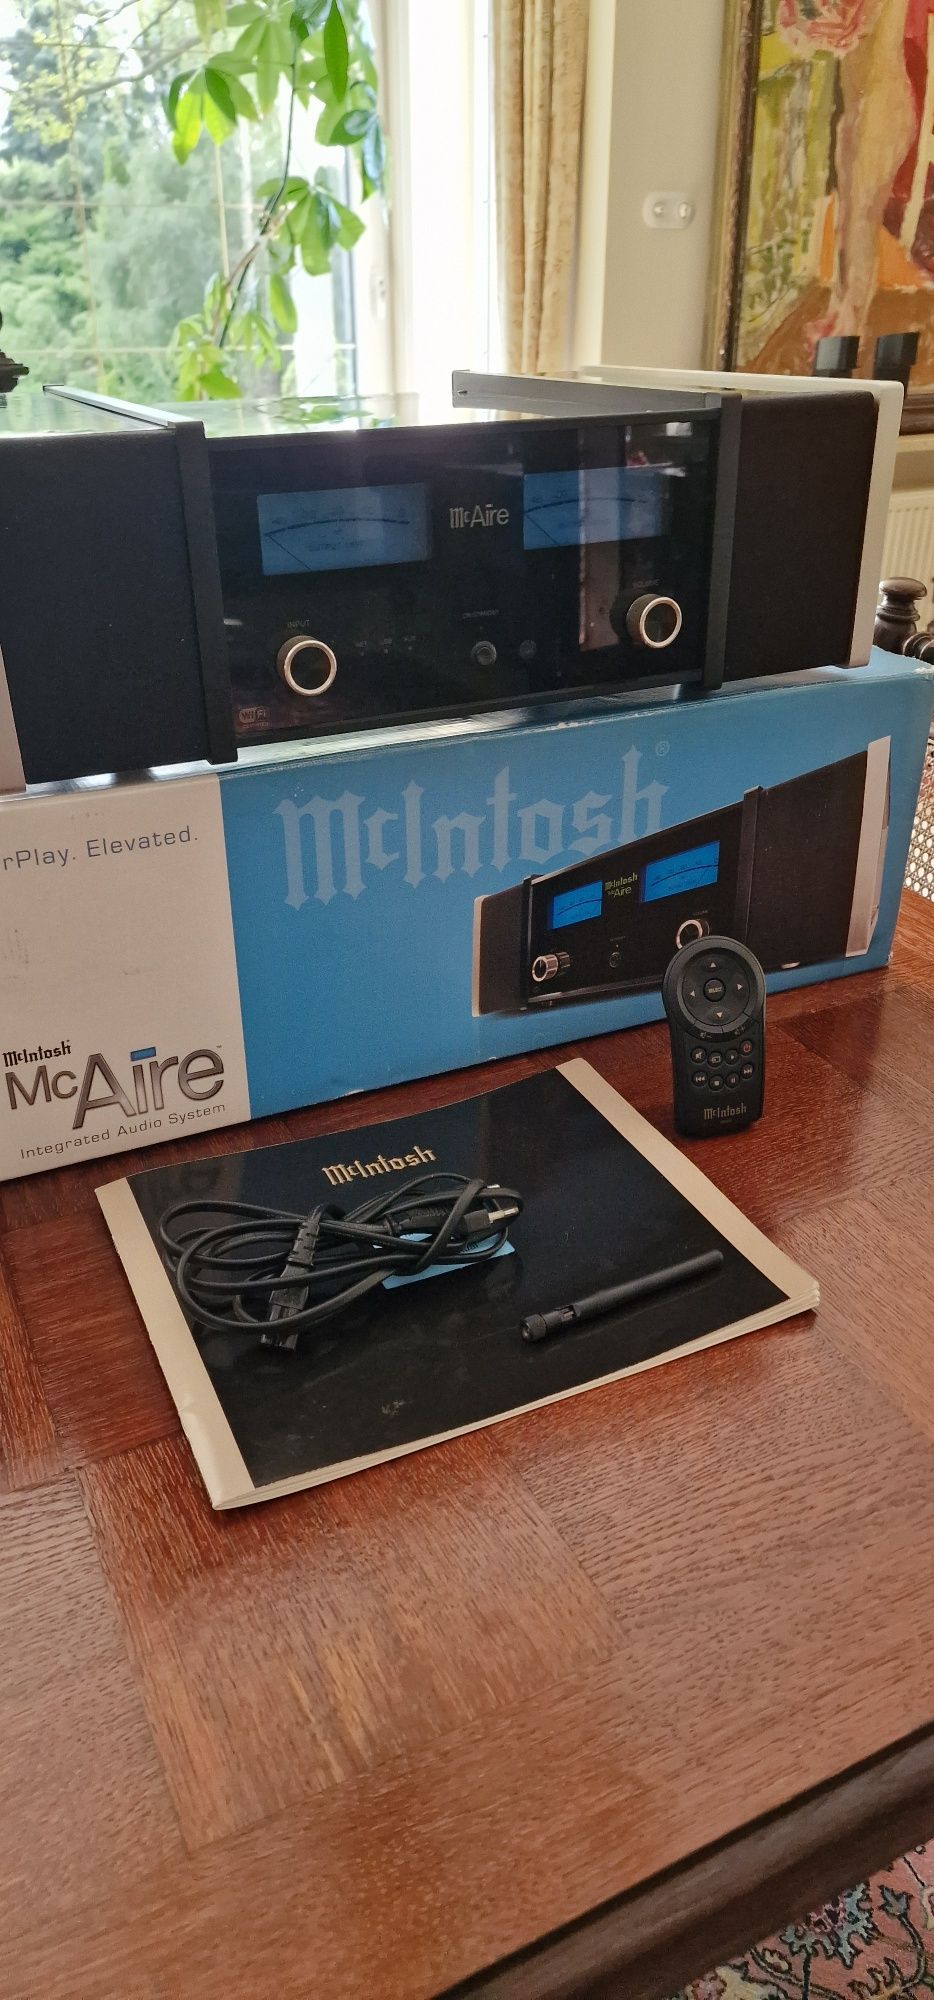 Mcintosh MC Aire Audio system